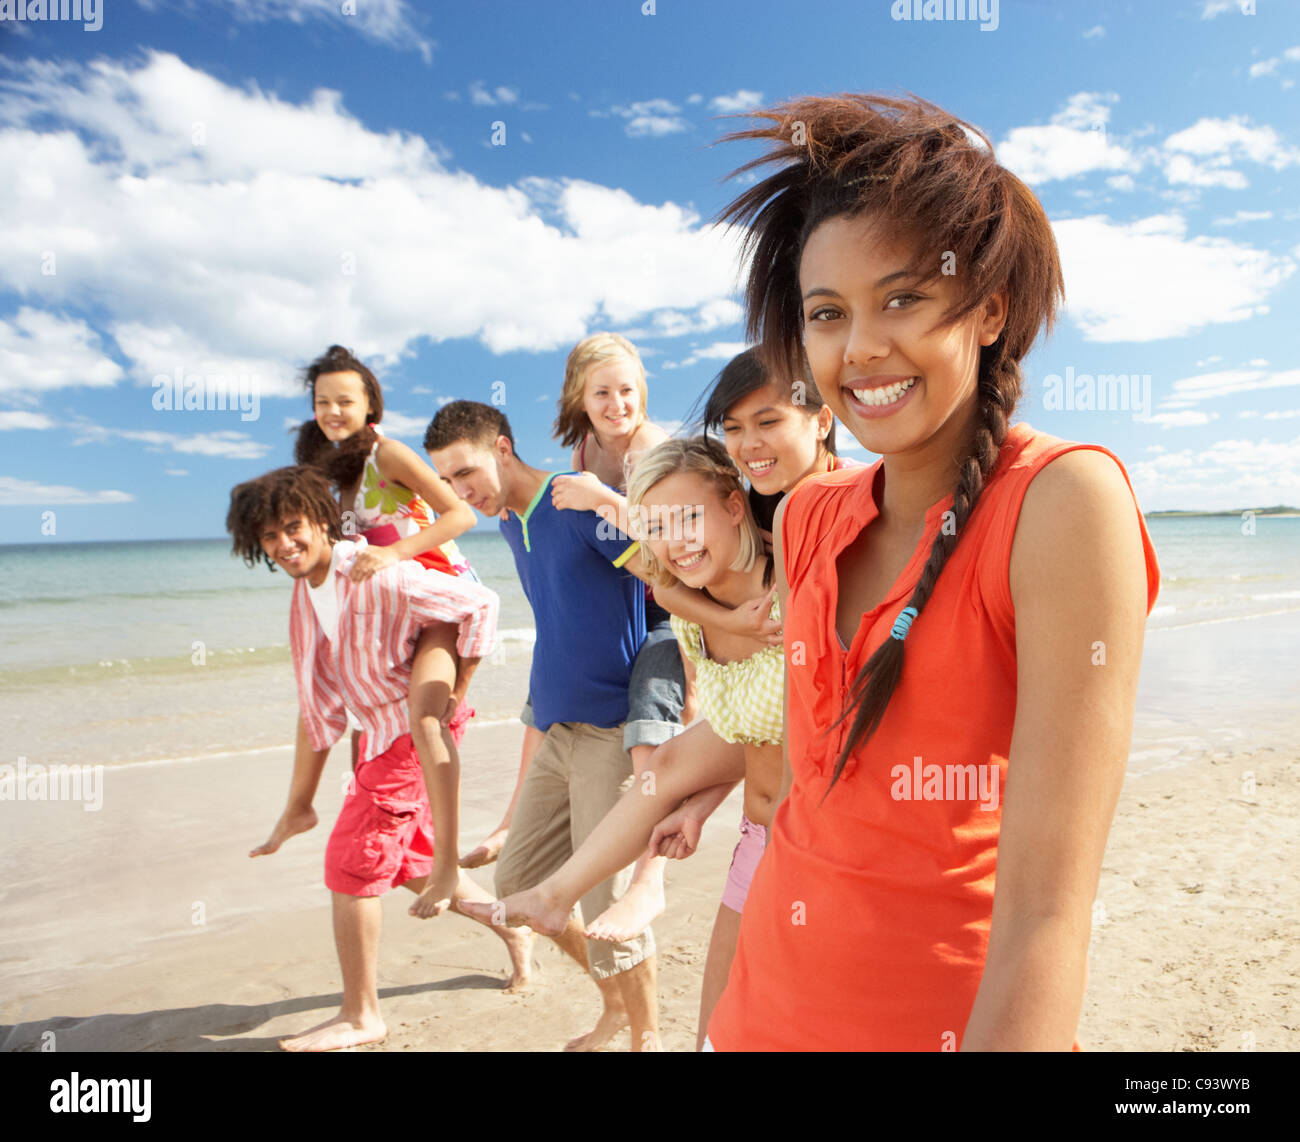 Teenagers walking on beach Stock Photo